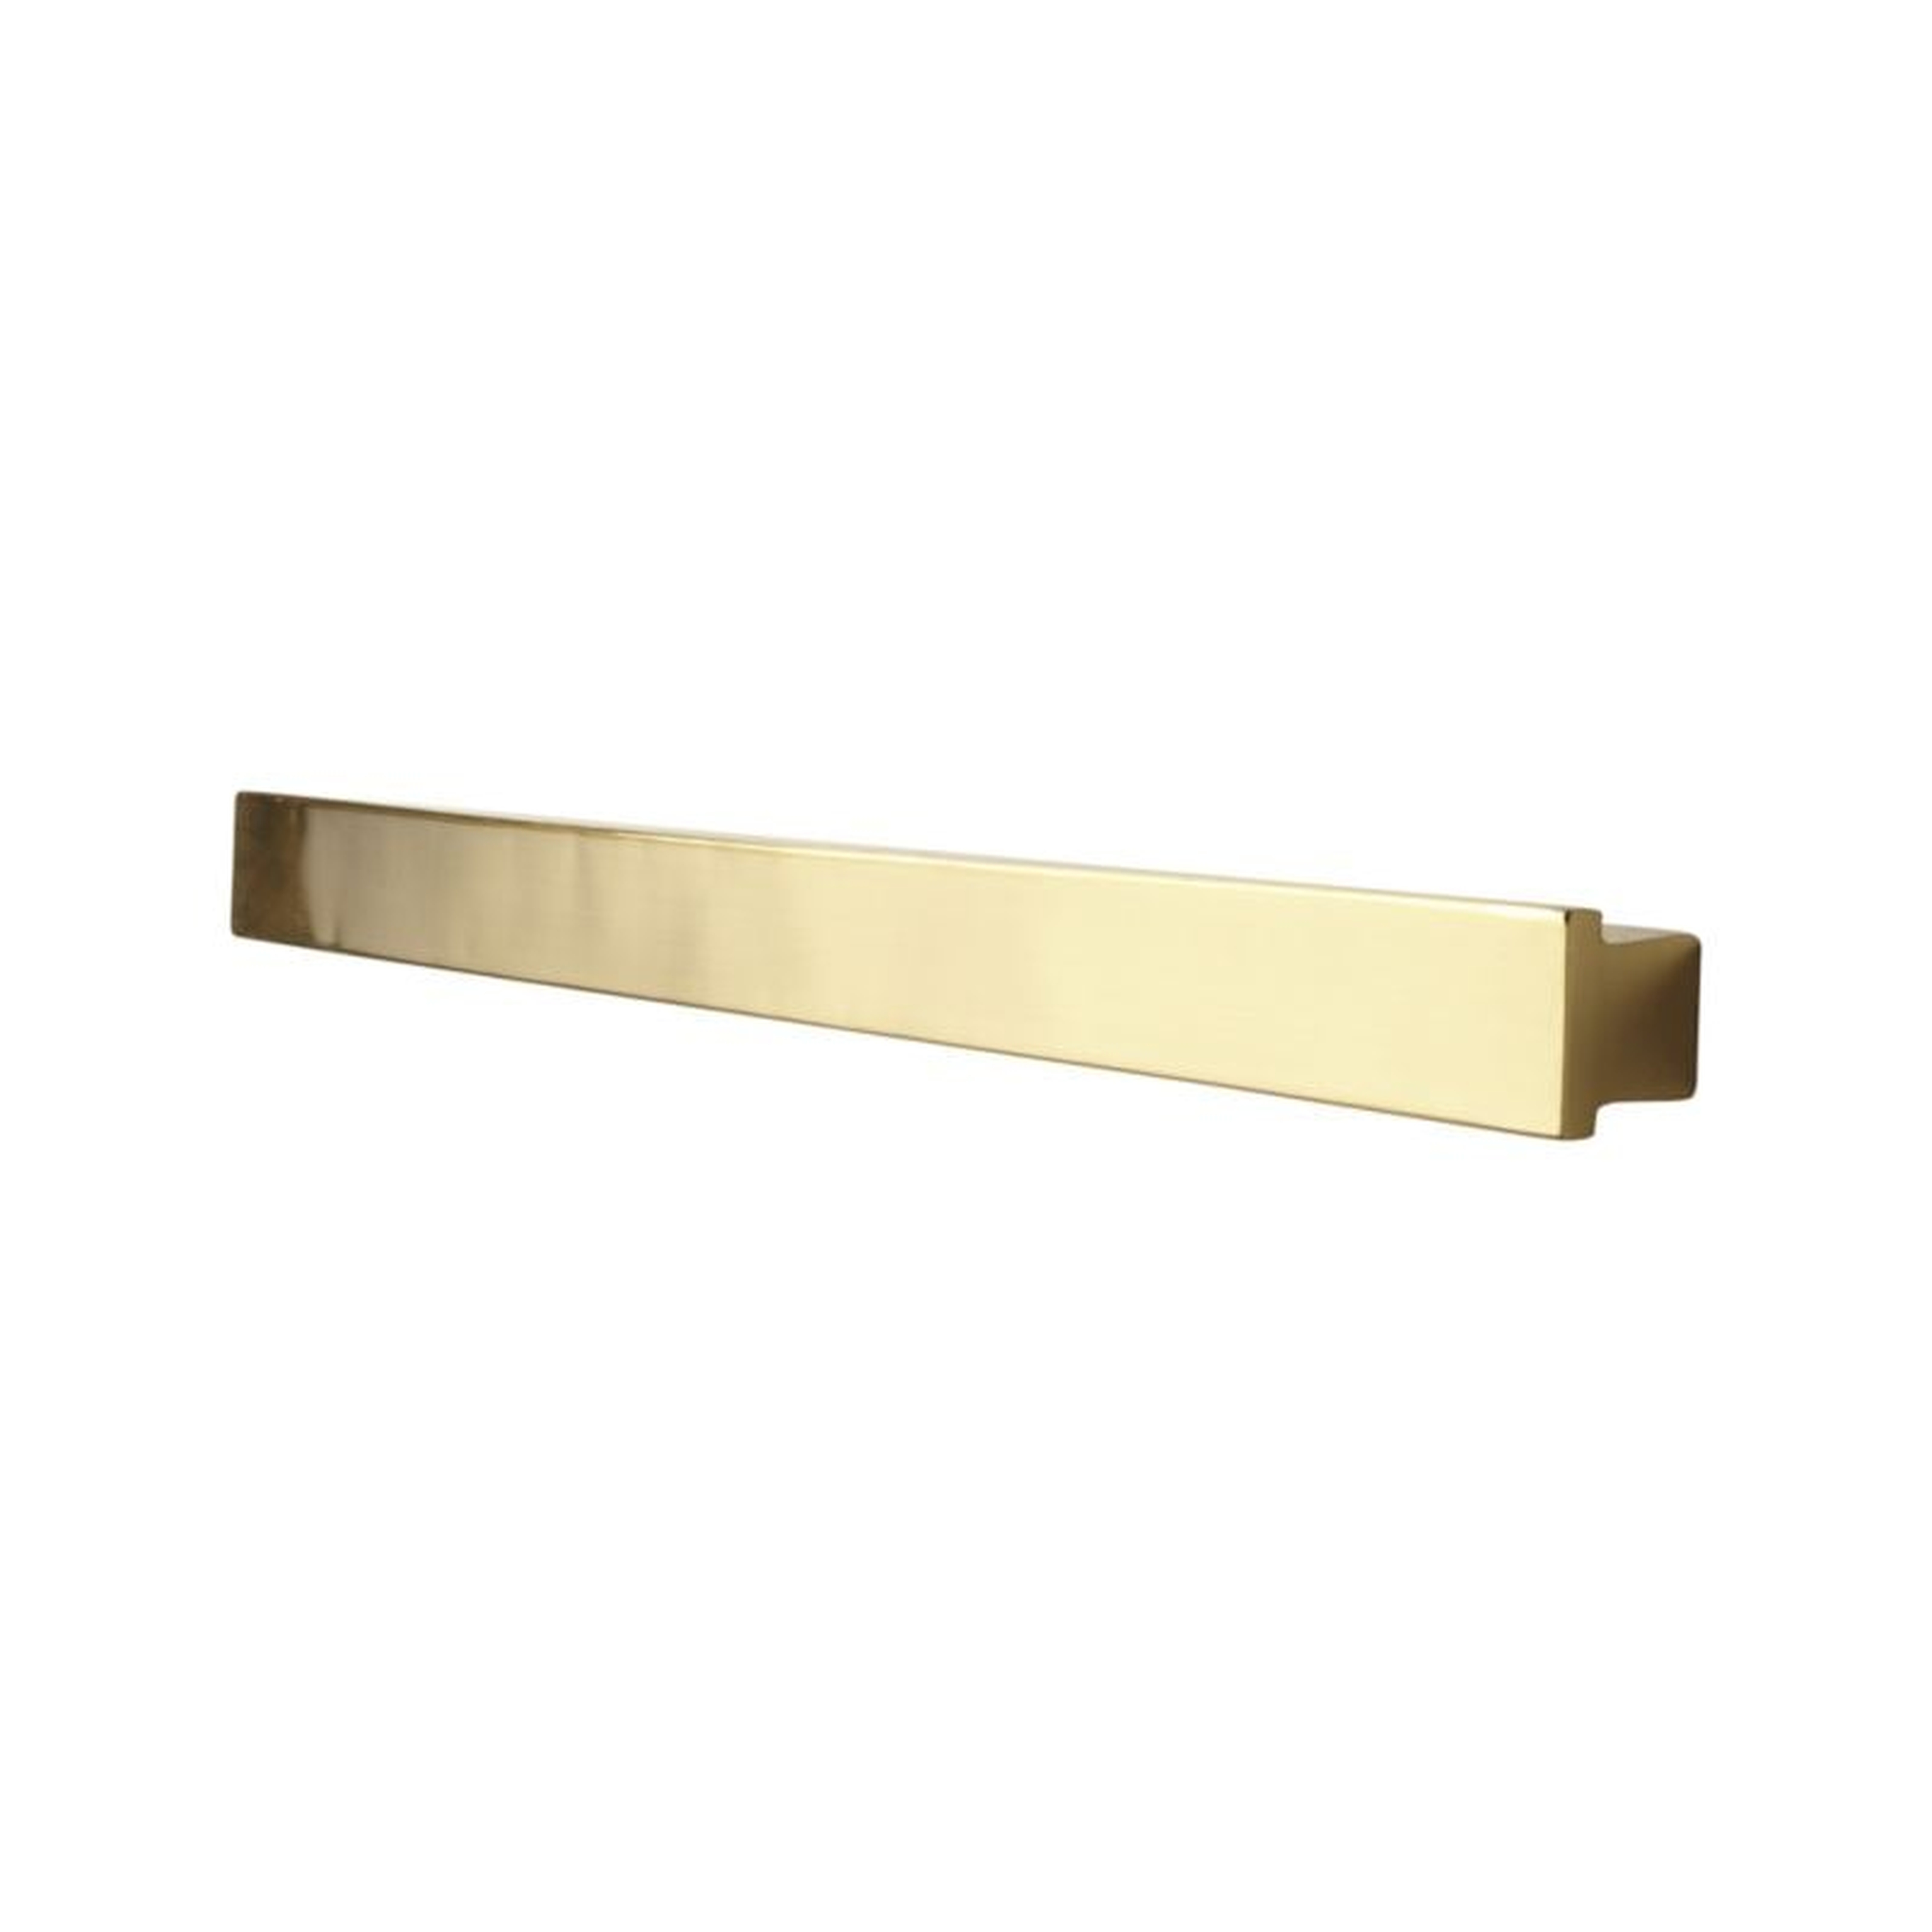 Metallic Gold Wall Shelf - Crate and Barrel